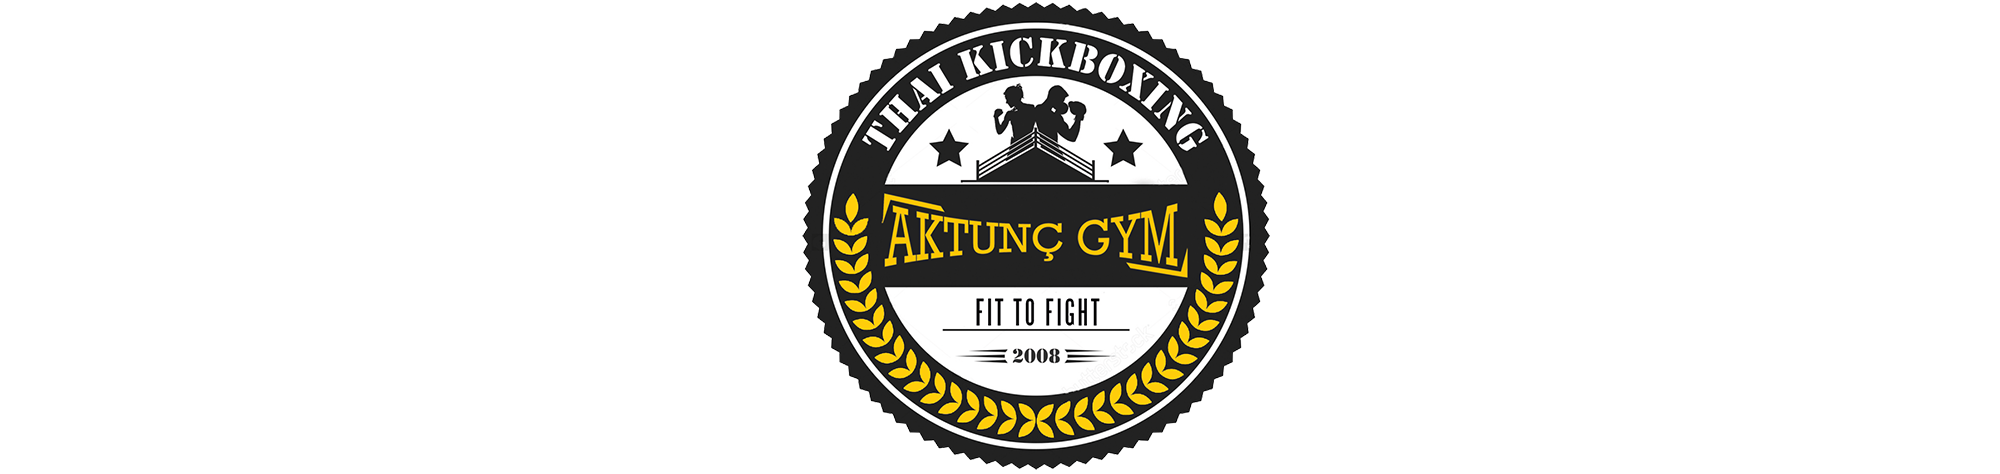 Aktunç Gym Fight Academy / Ataşehir Kickboks Muaythai Boks Mma